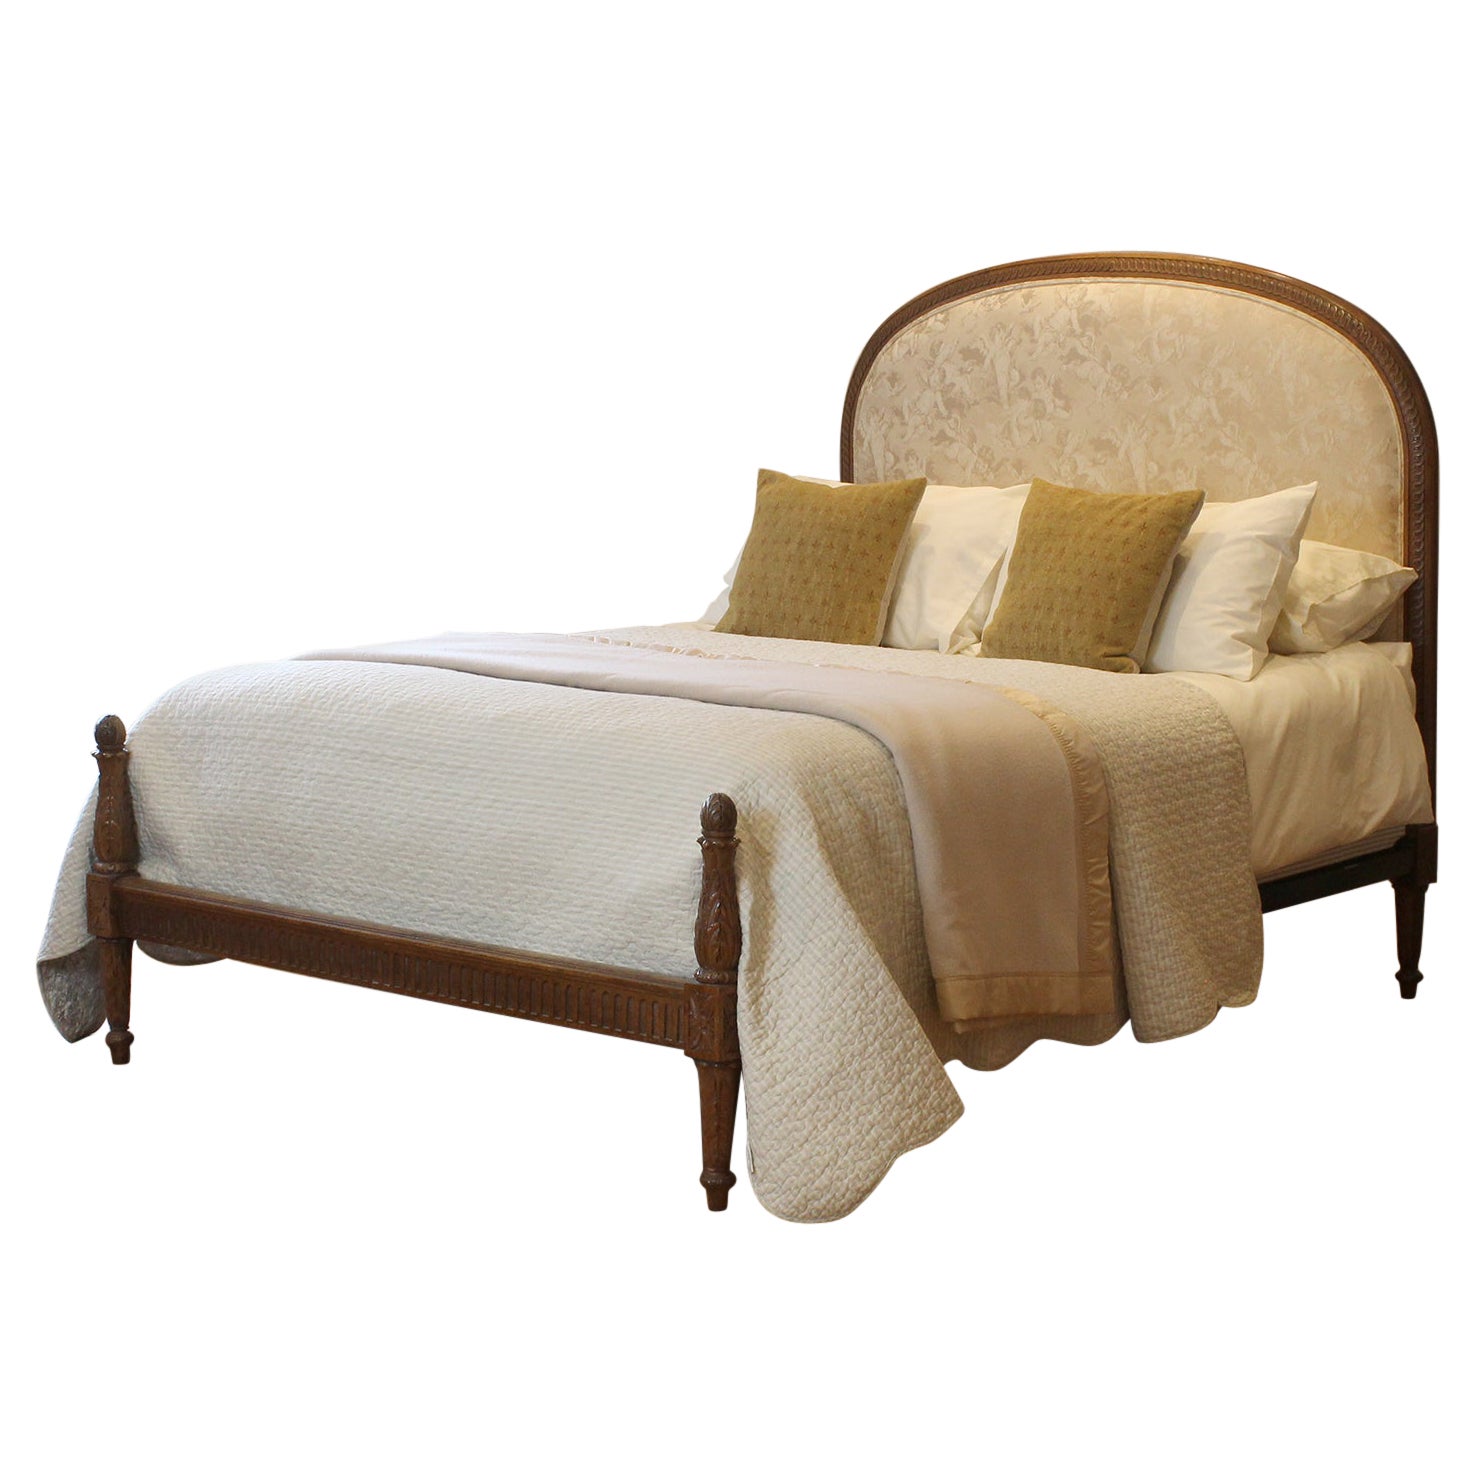 Upholstered Antique Bed Wk168